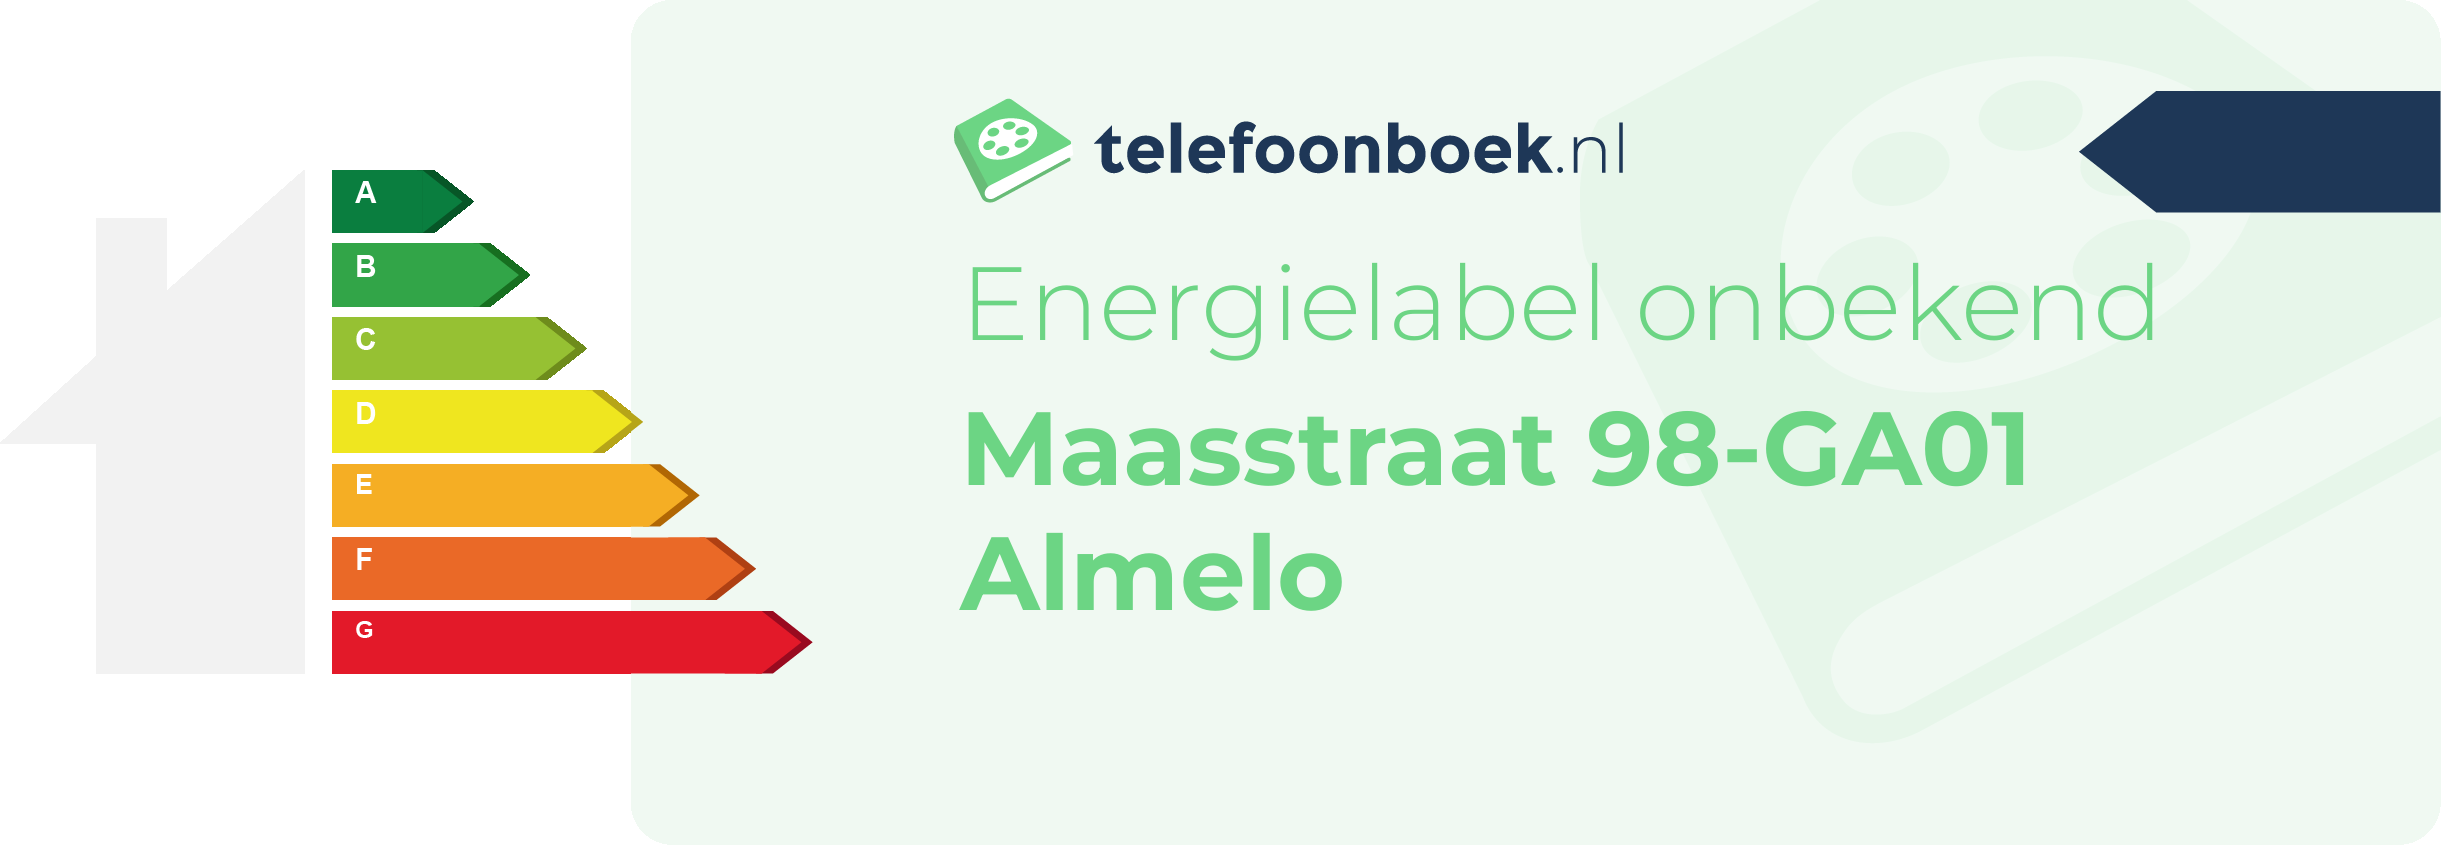 Energielabel Maasstraat 98-GA01 Almelo